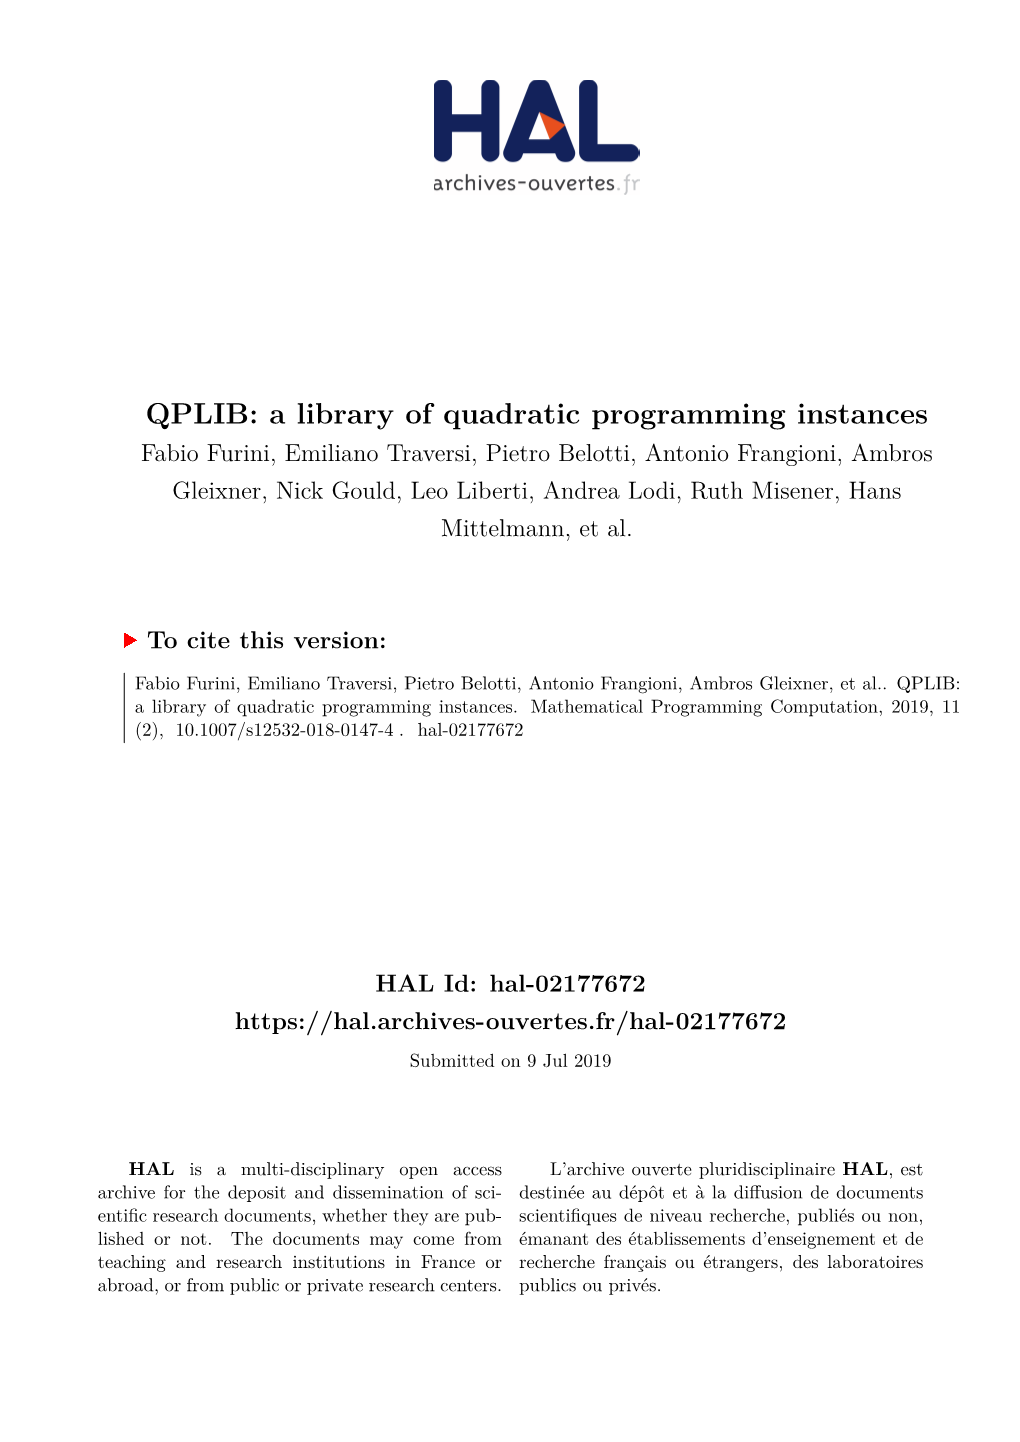 A Library of Quadratic Programming Instances